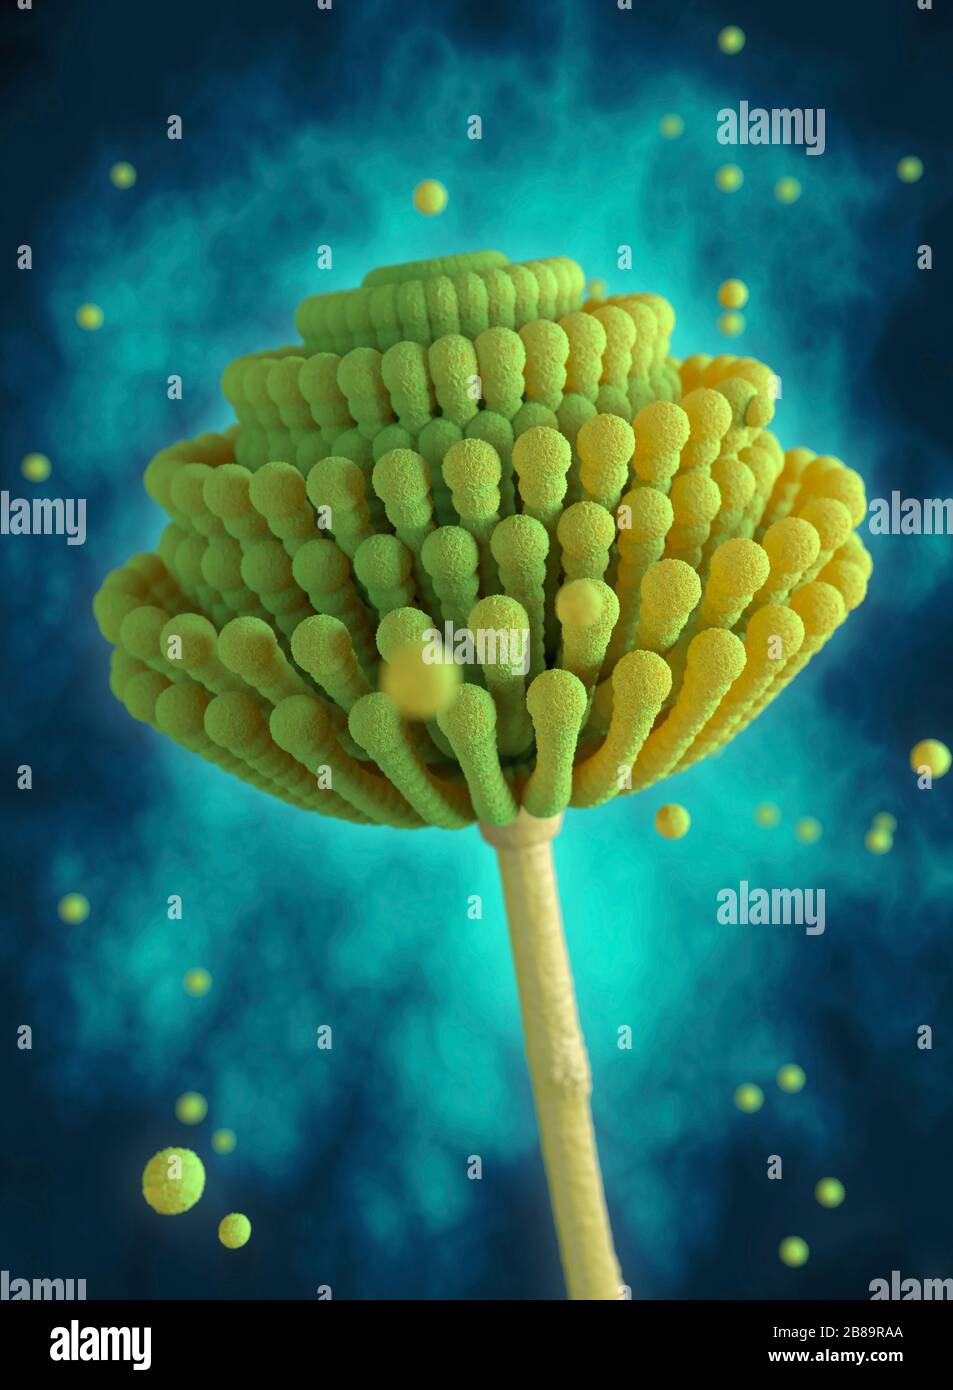 Aspergillus mould and spores, illustration Stock Photo